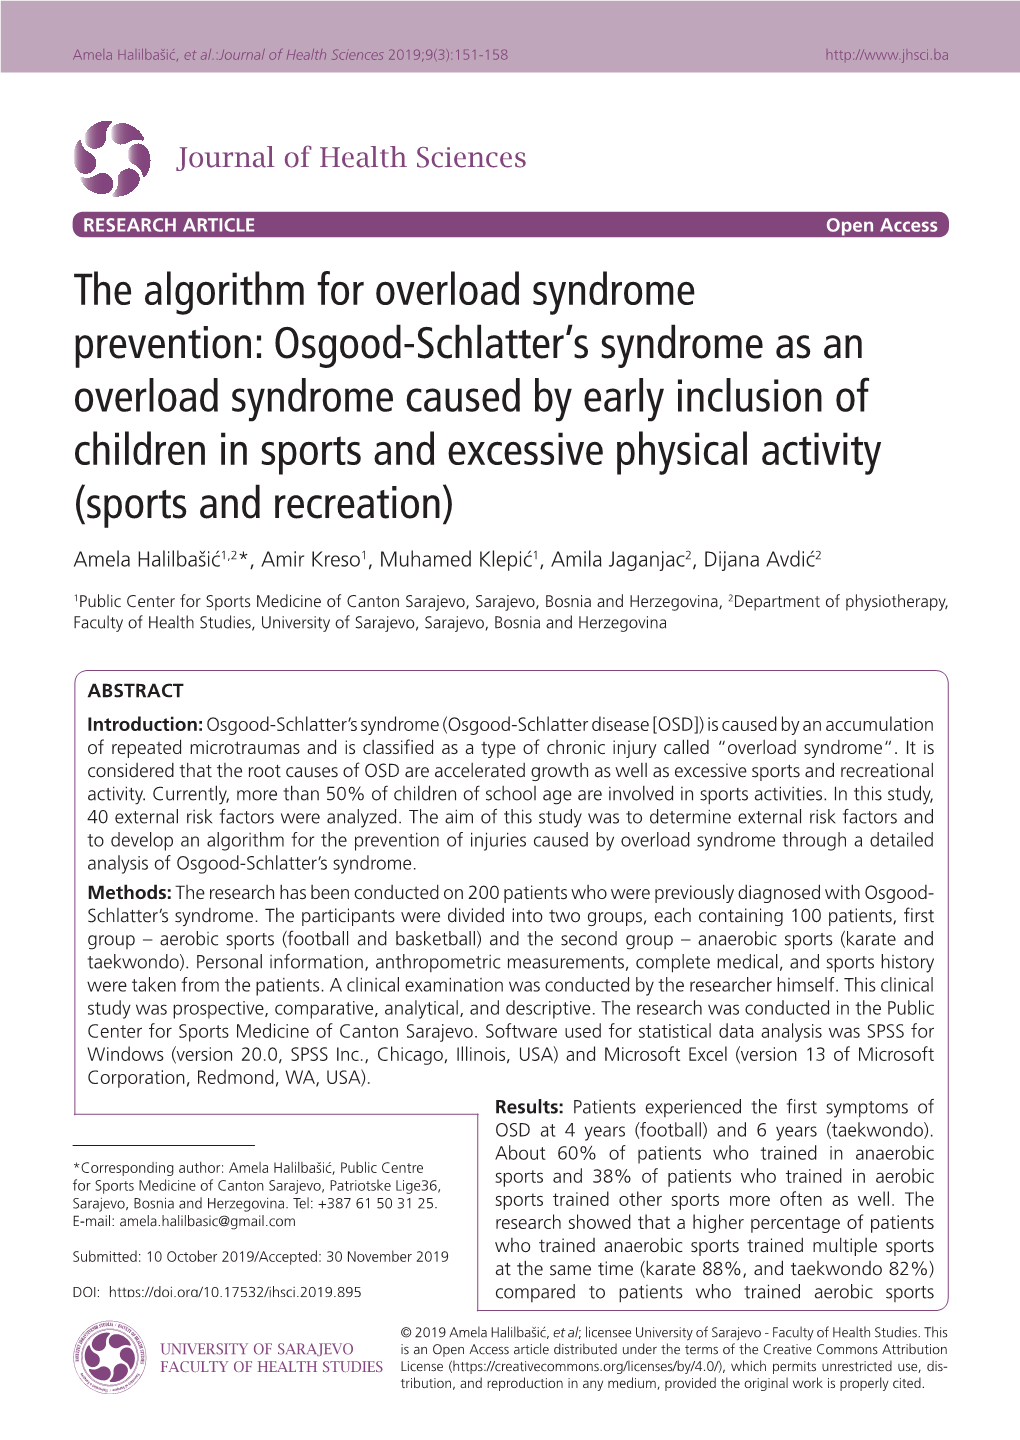 The Algorithm for Overload Syndrome Prevention: Osgood-Schlatter's